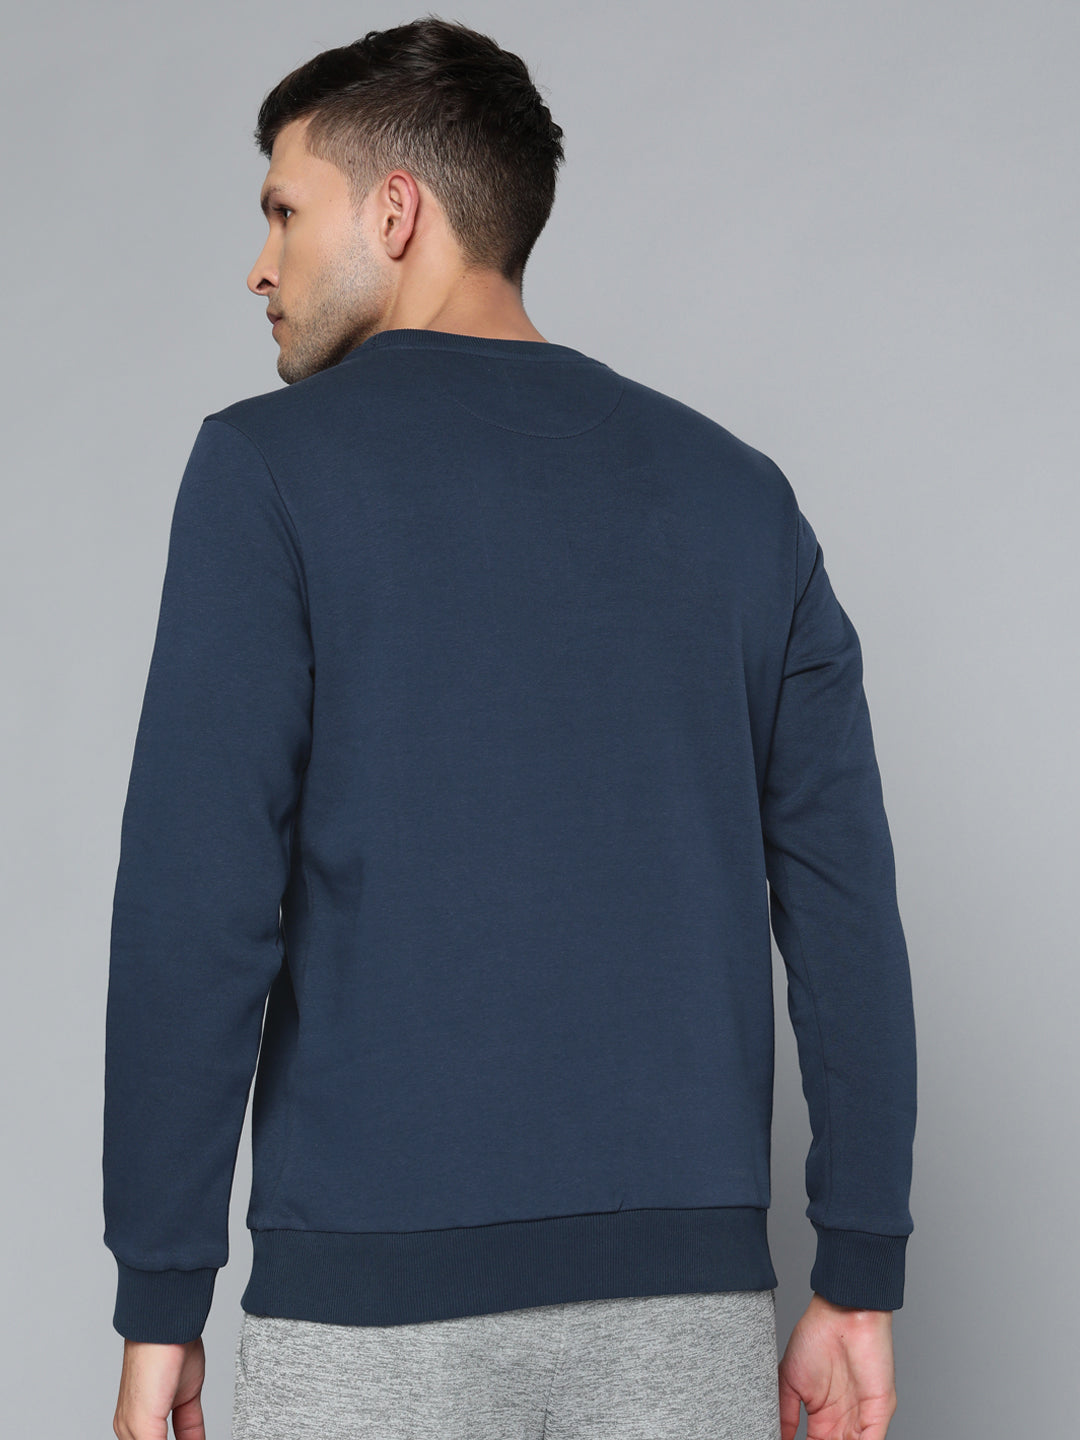 Alcis Men Navy Blue Solid Cotton Sweatshirt